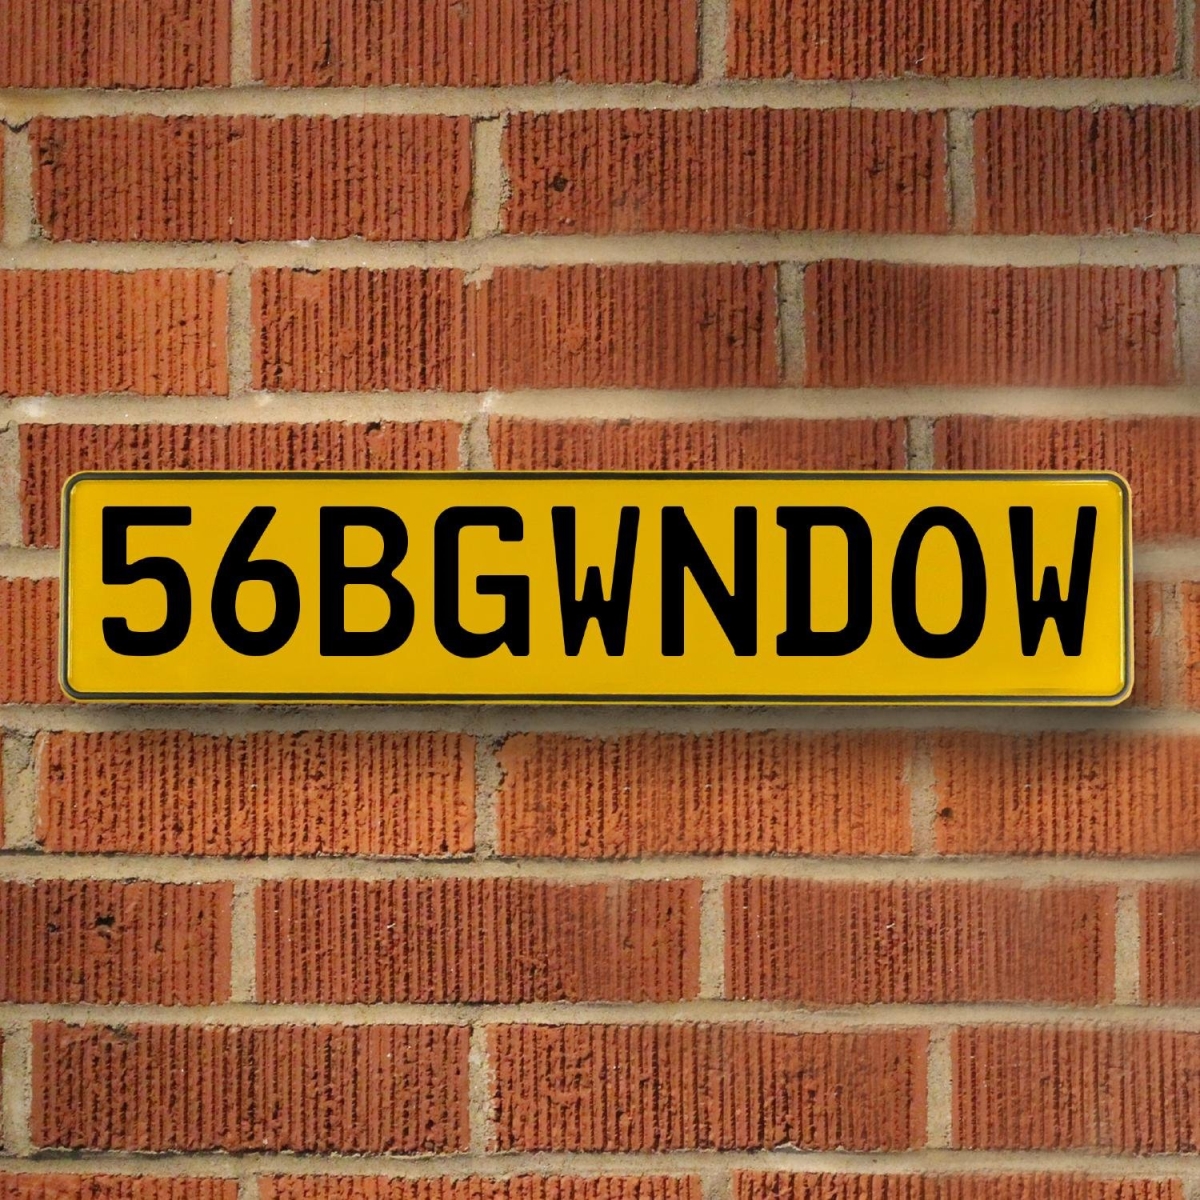 56bgwndow - Yellow Aluminum Street Sign Mancave Euro Plate Name Door Sign Wall